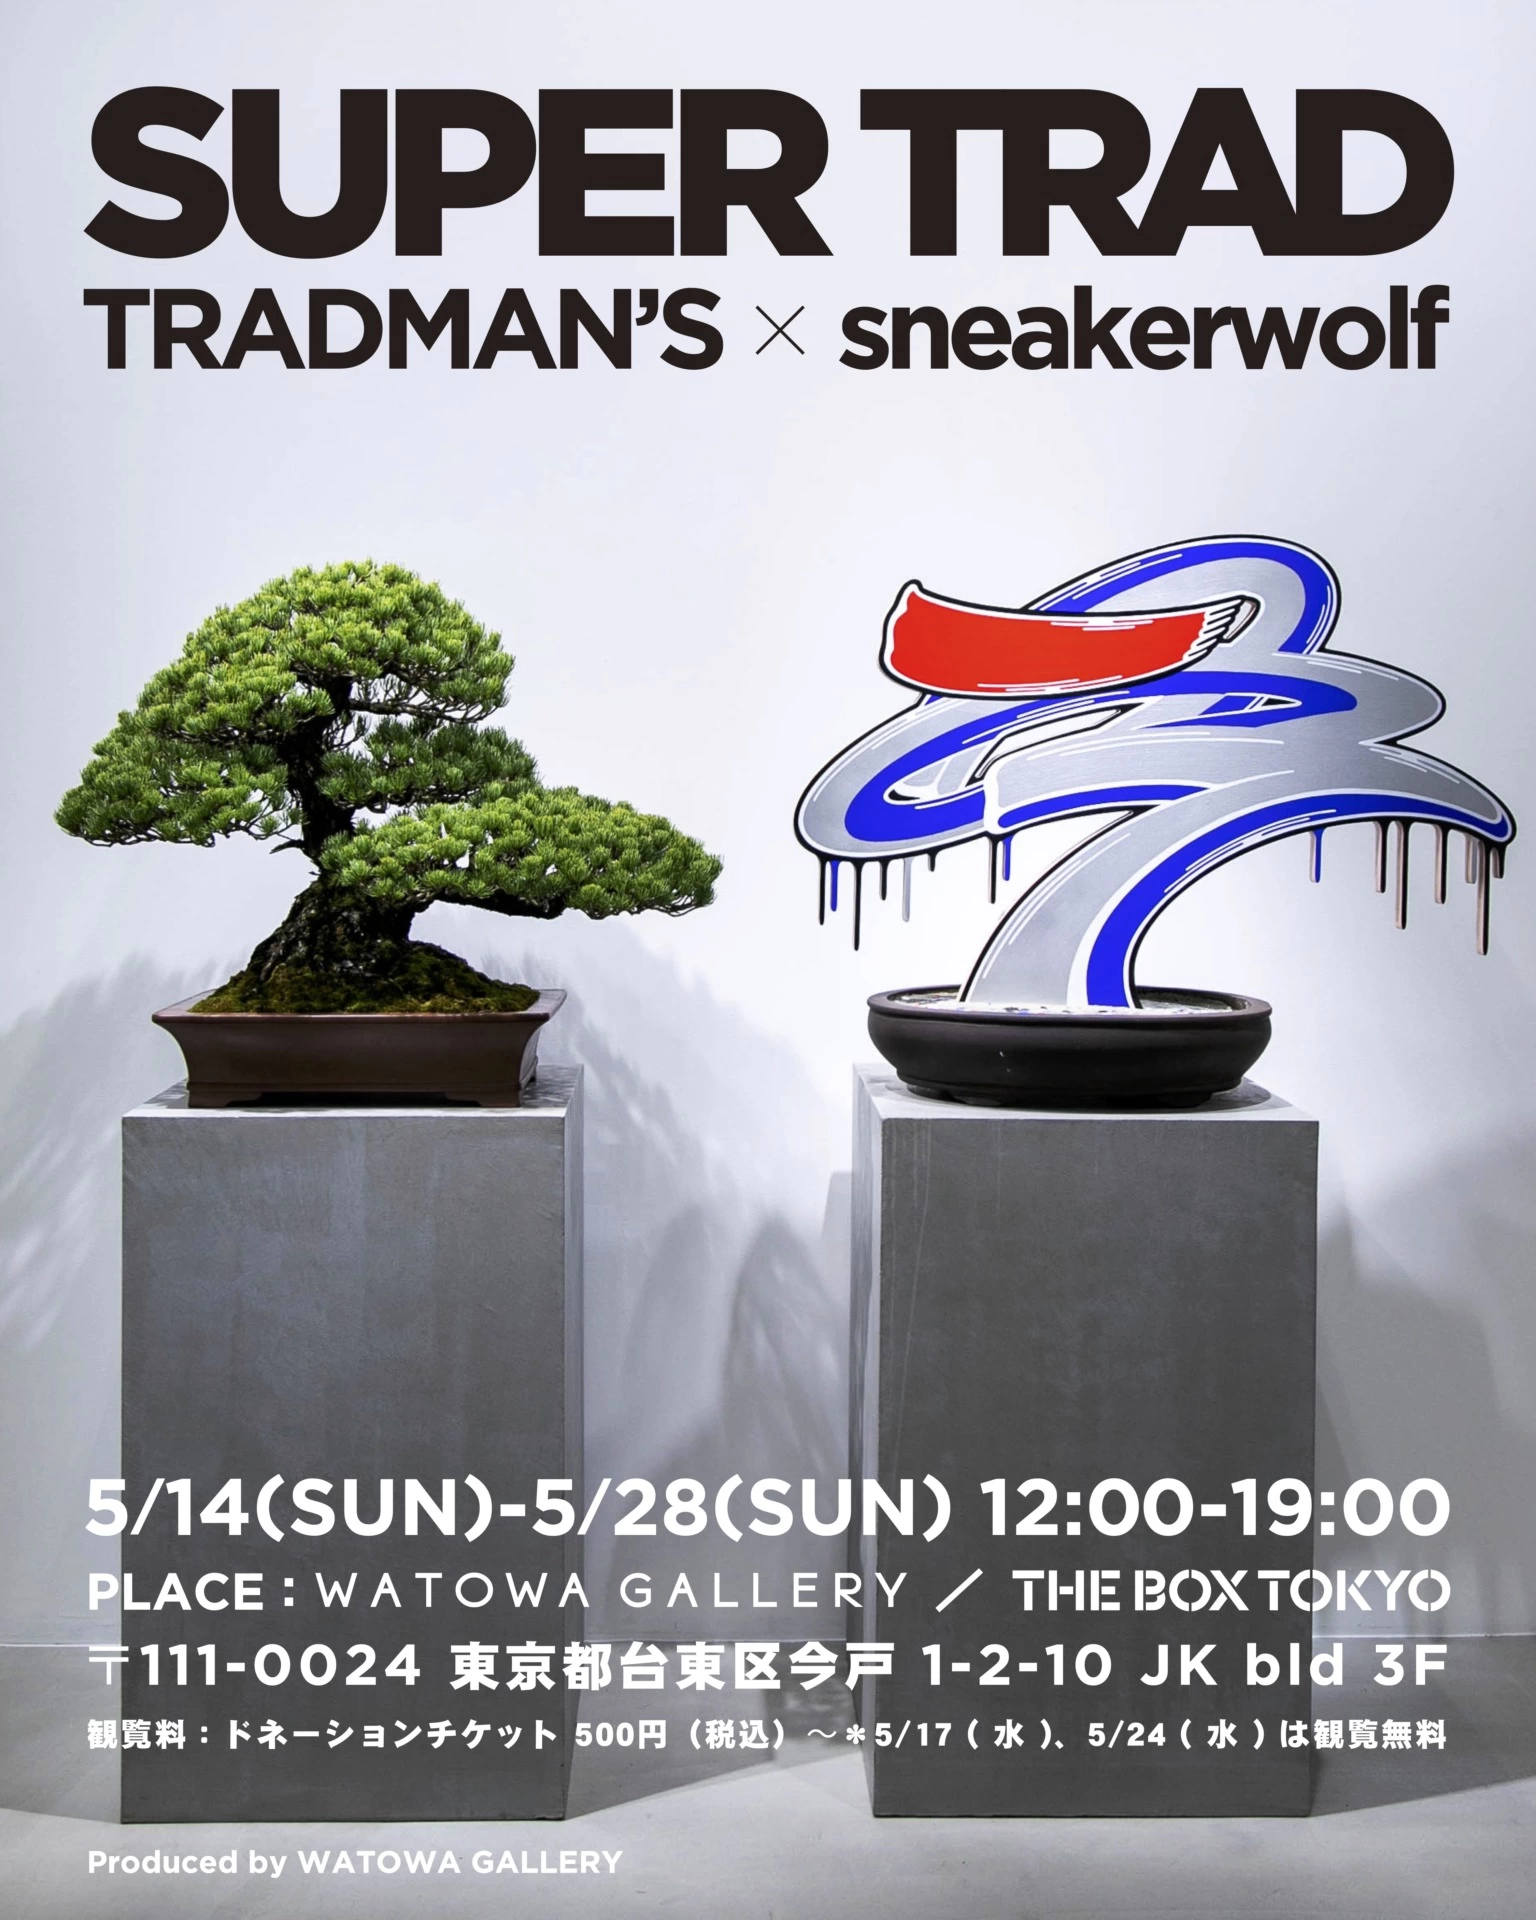 TRADMAN’S × sneakerwolf “SUPER TRAD”